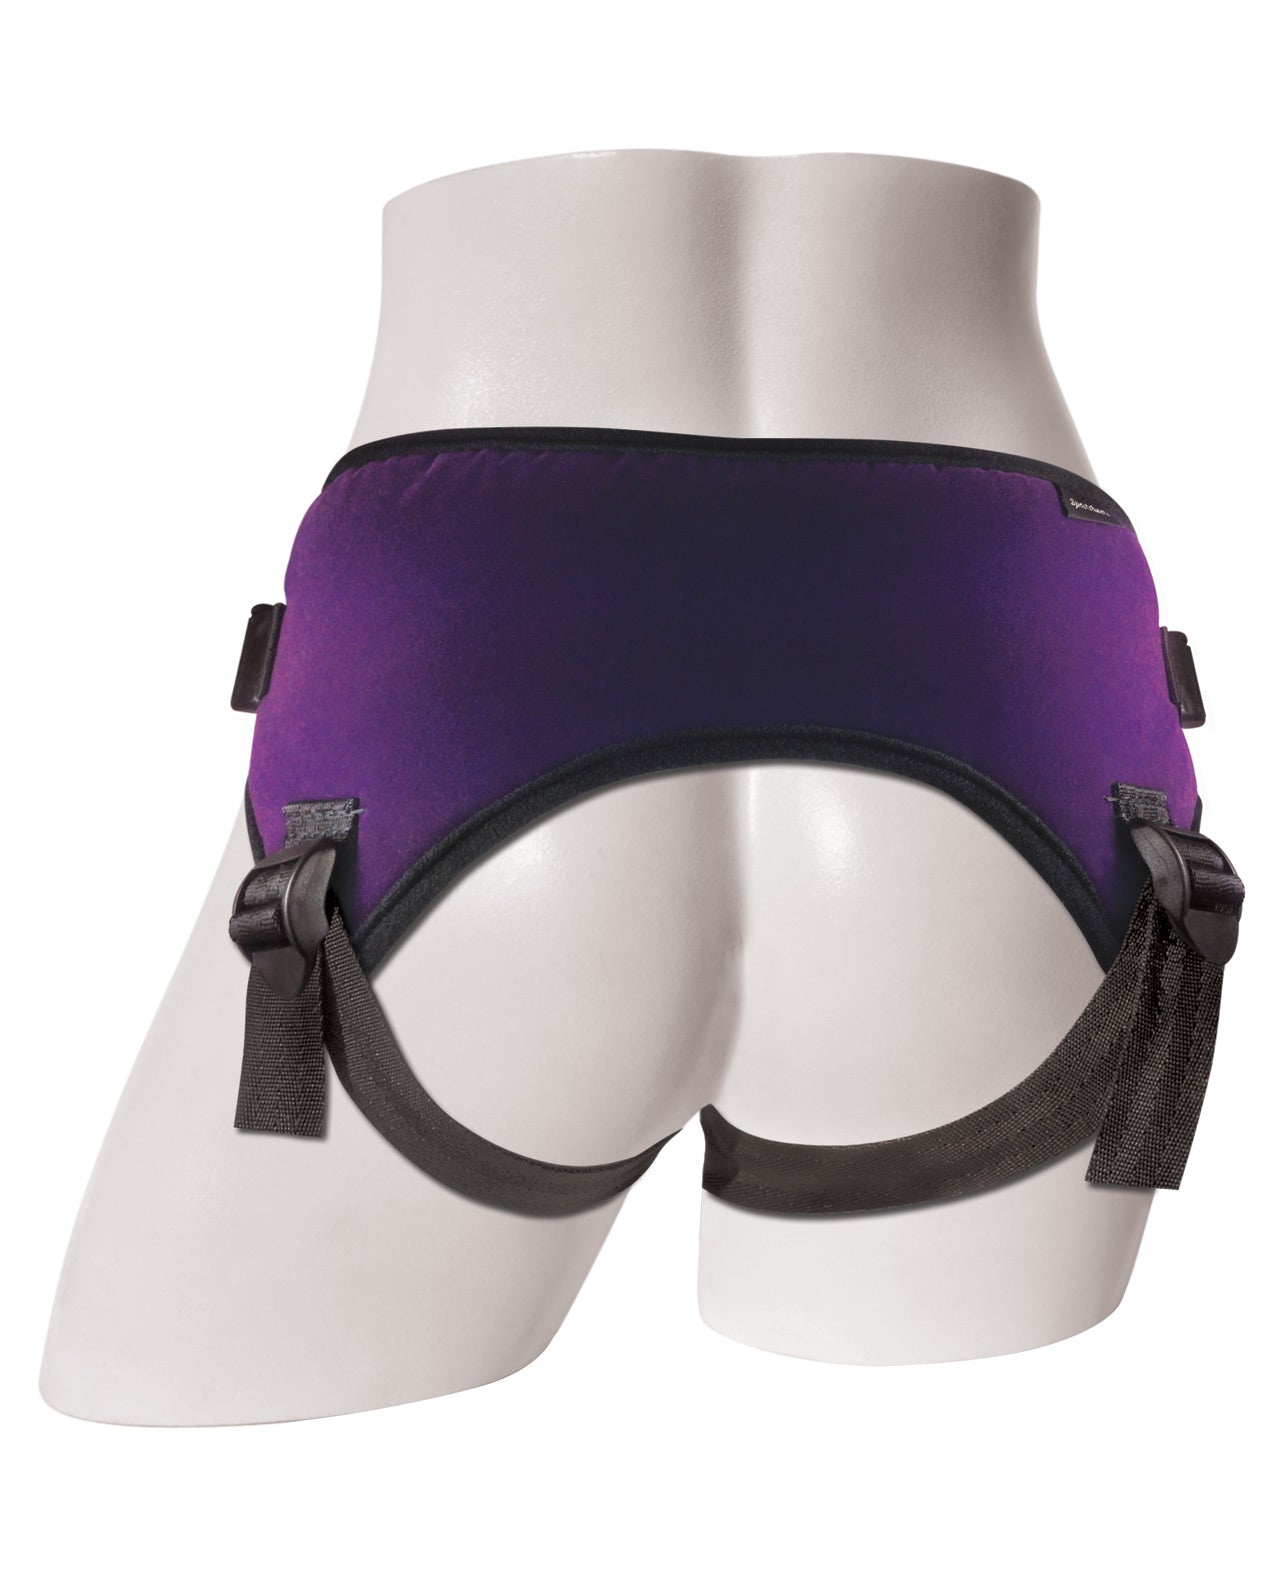 Sportsheets Lush Strap On Harness - Purple - LUST Depot